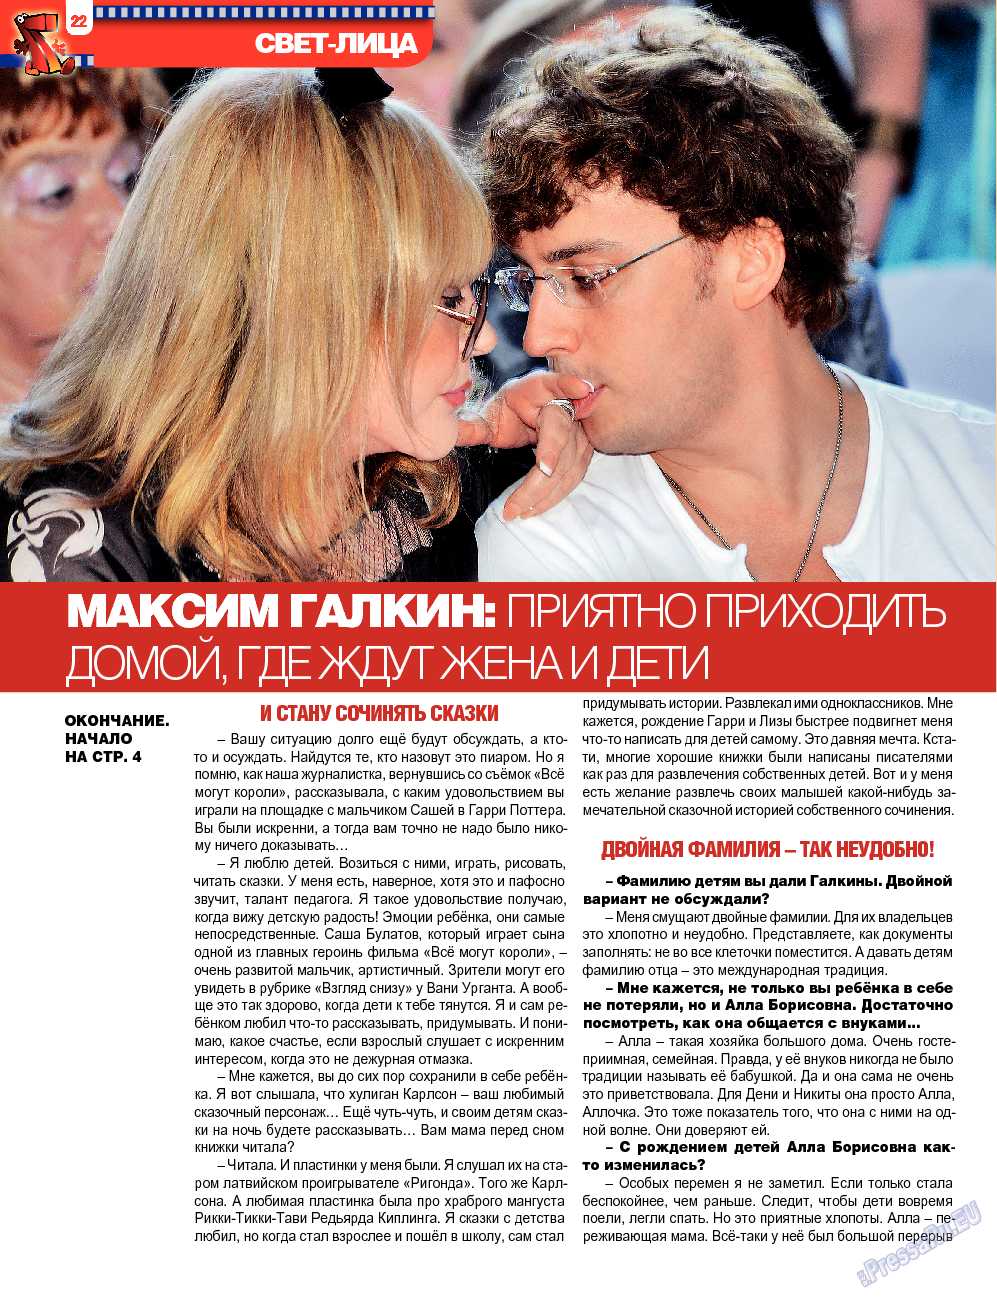 7плюс7я (журнал). 2013 год, номер 42, стр. 22